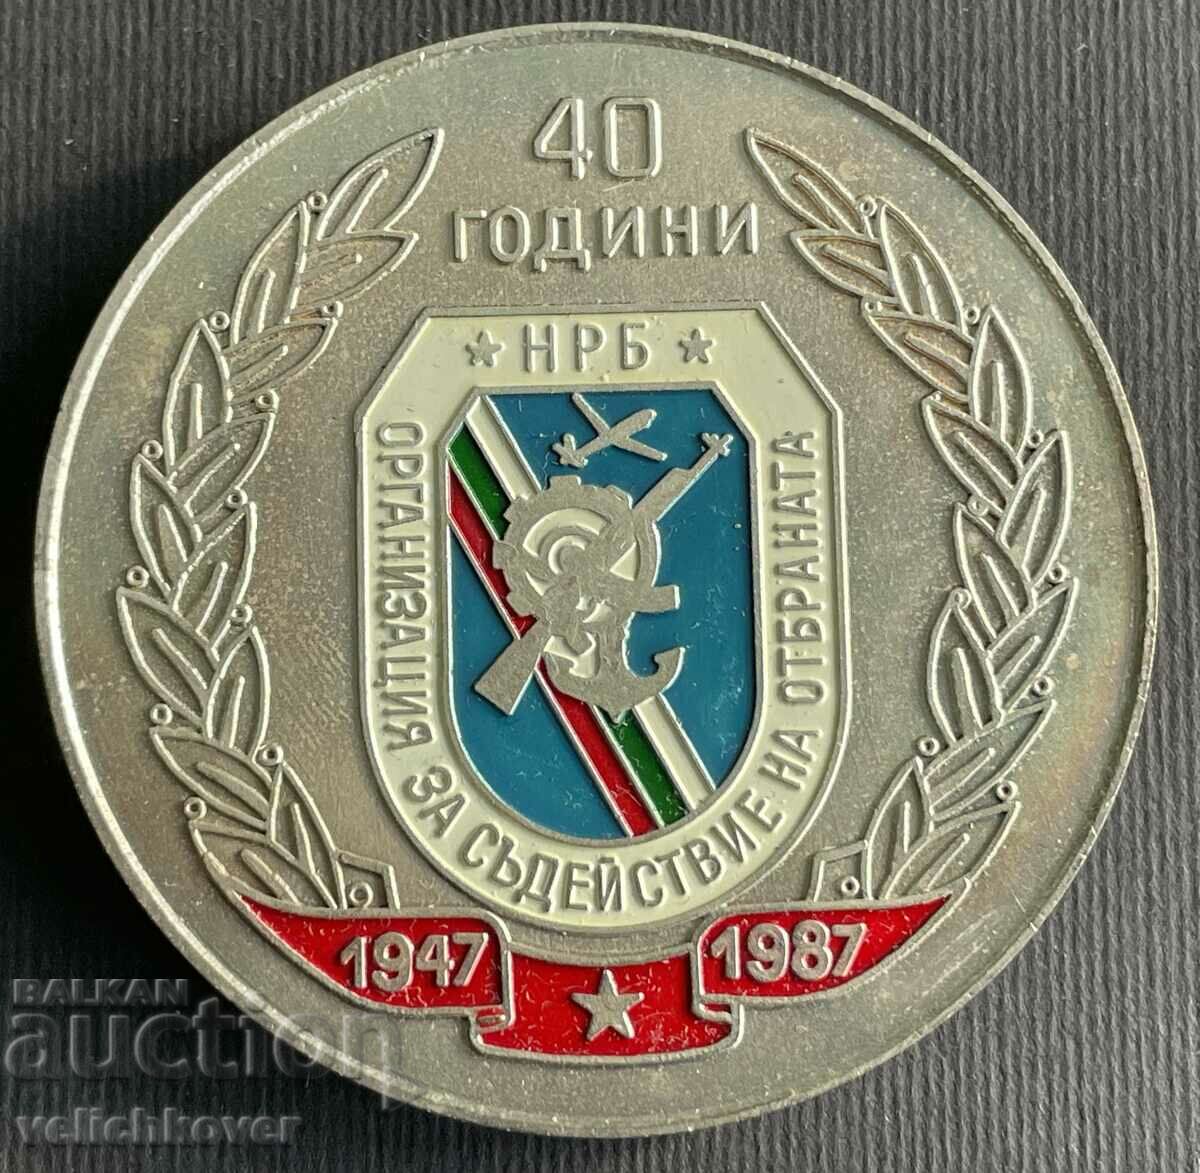 36981 Placa Bulgaria 40 ani. Organizația de asistență OSO